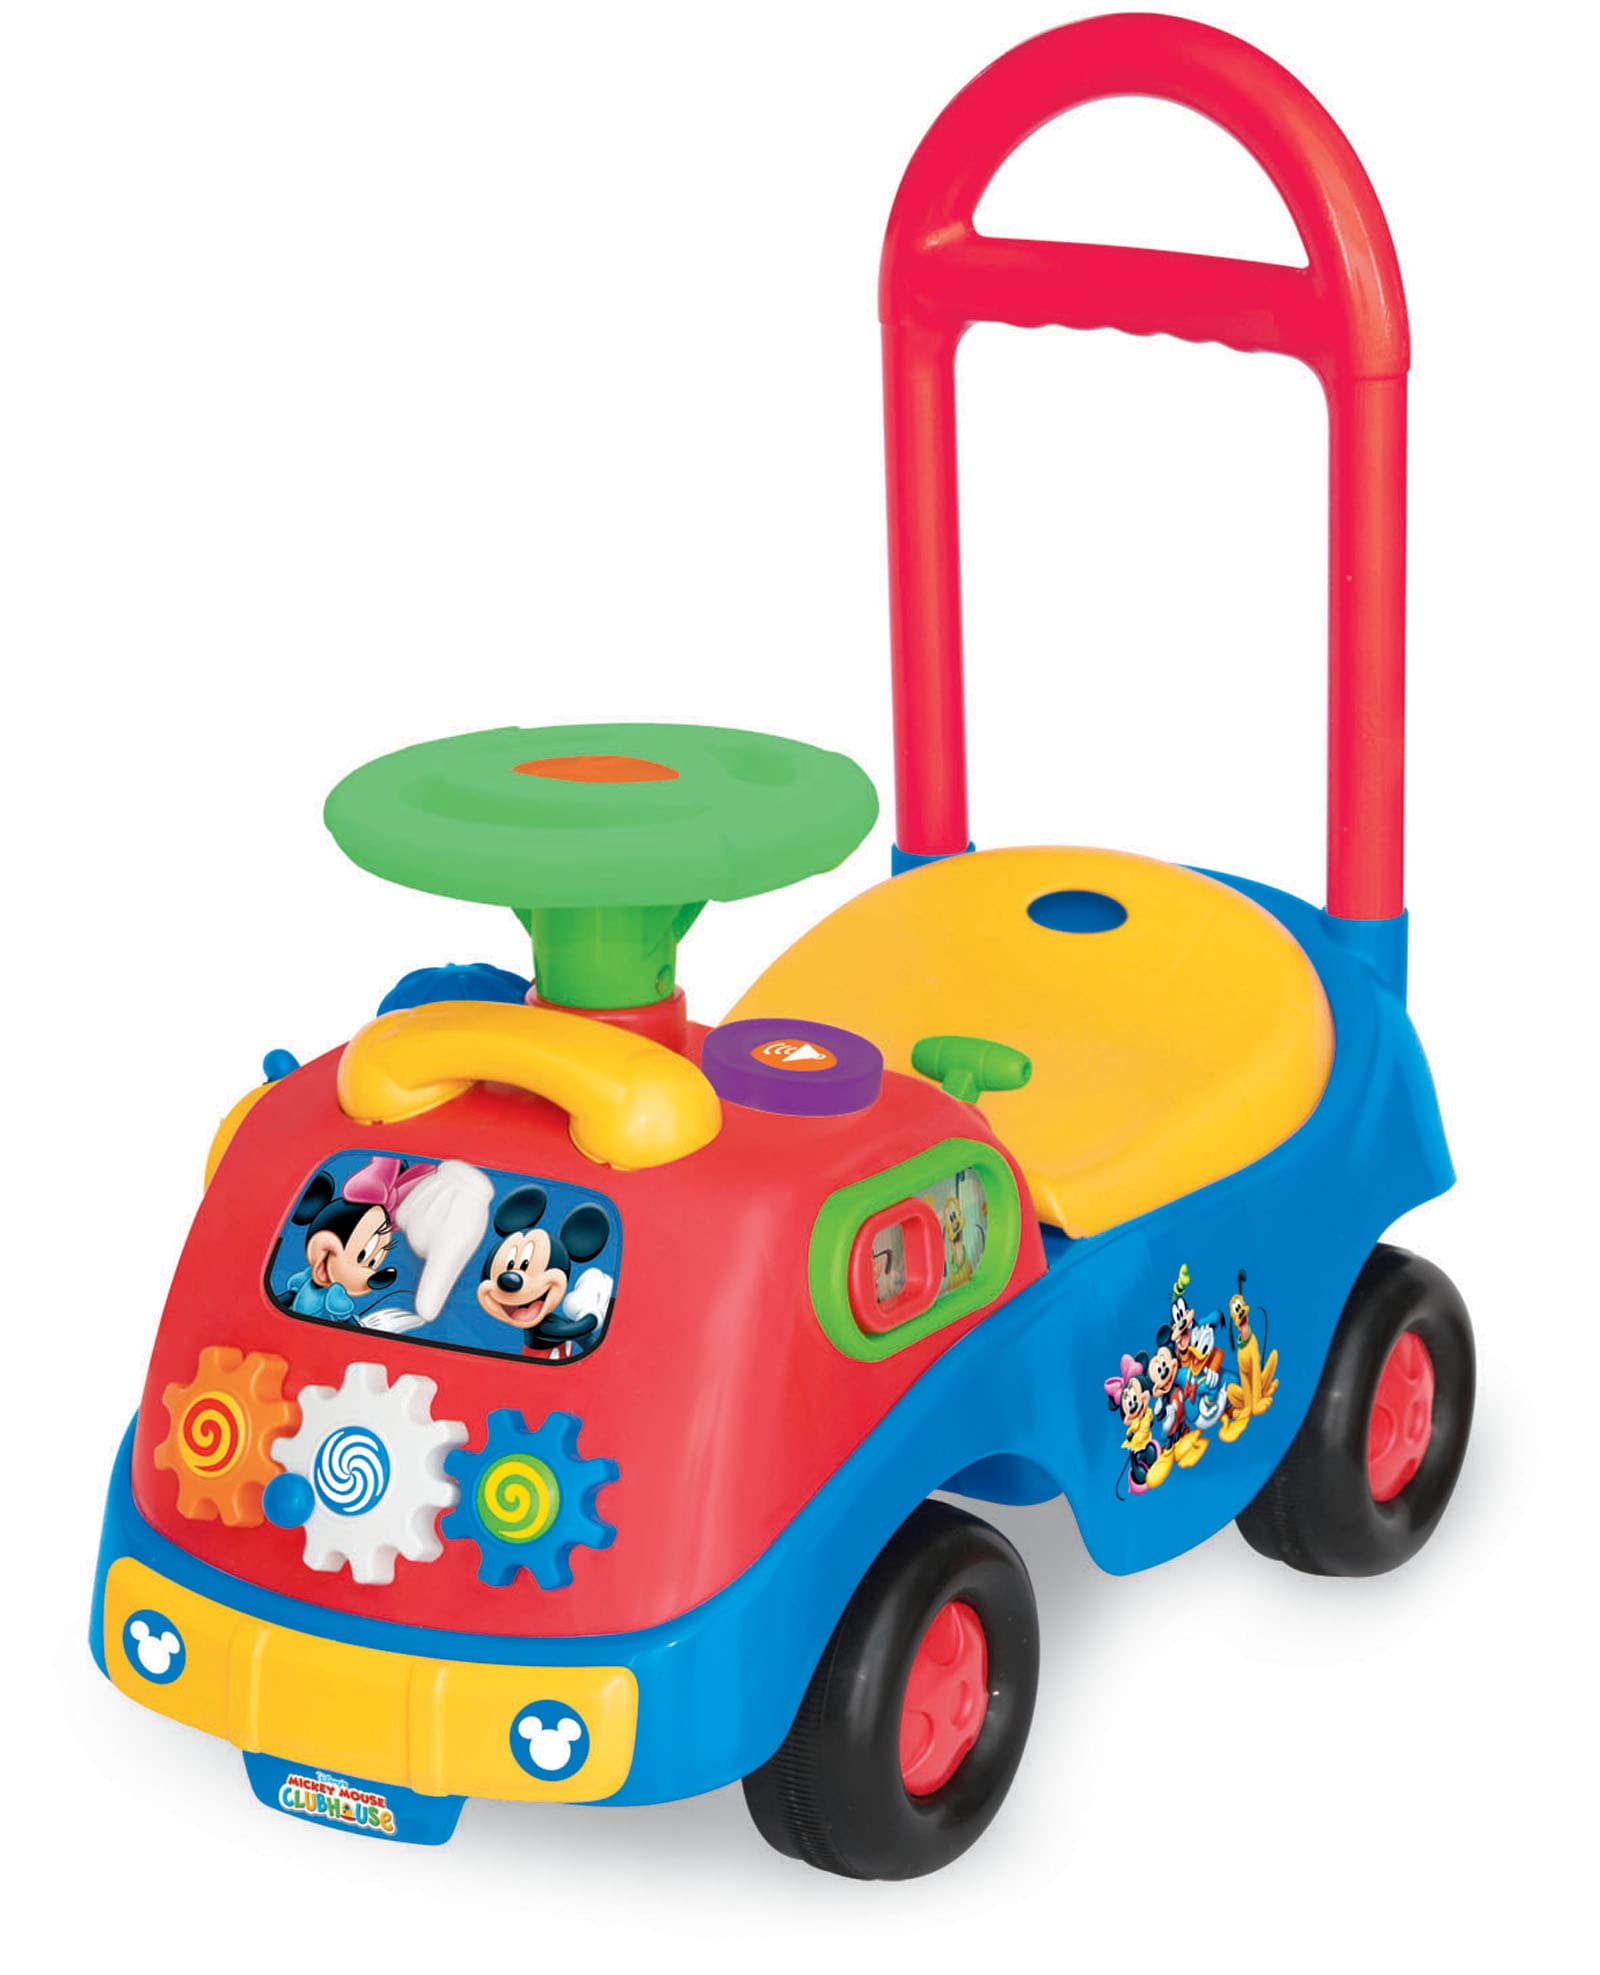 Kiddieland Disney Buzz Lightyear Ride On Toy with Music, Lights